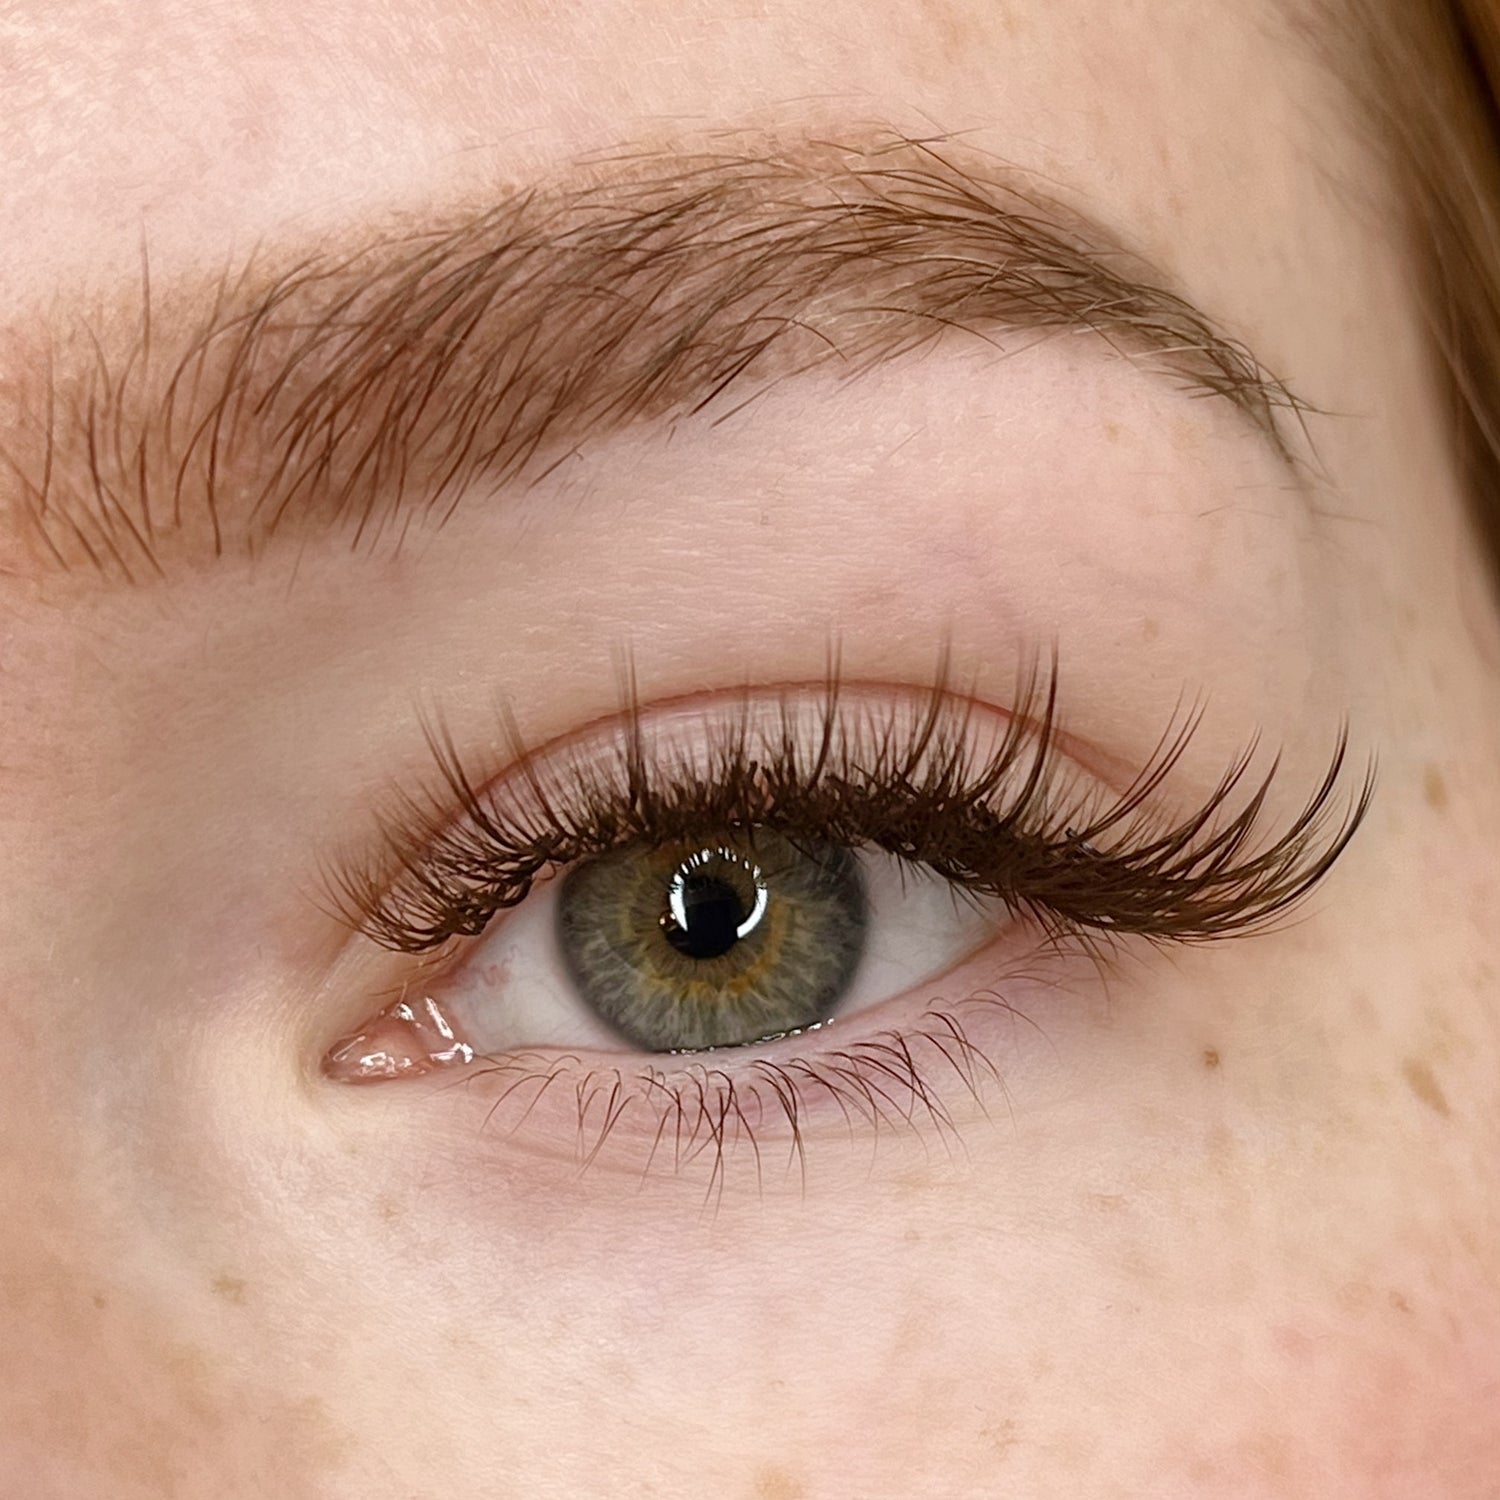 Eye with brown eyelash extensions